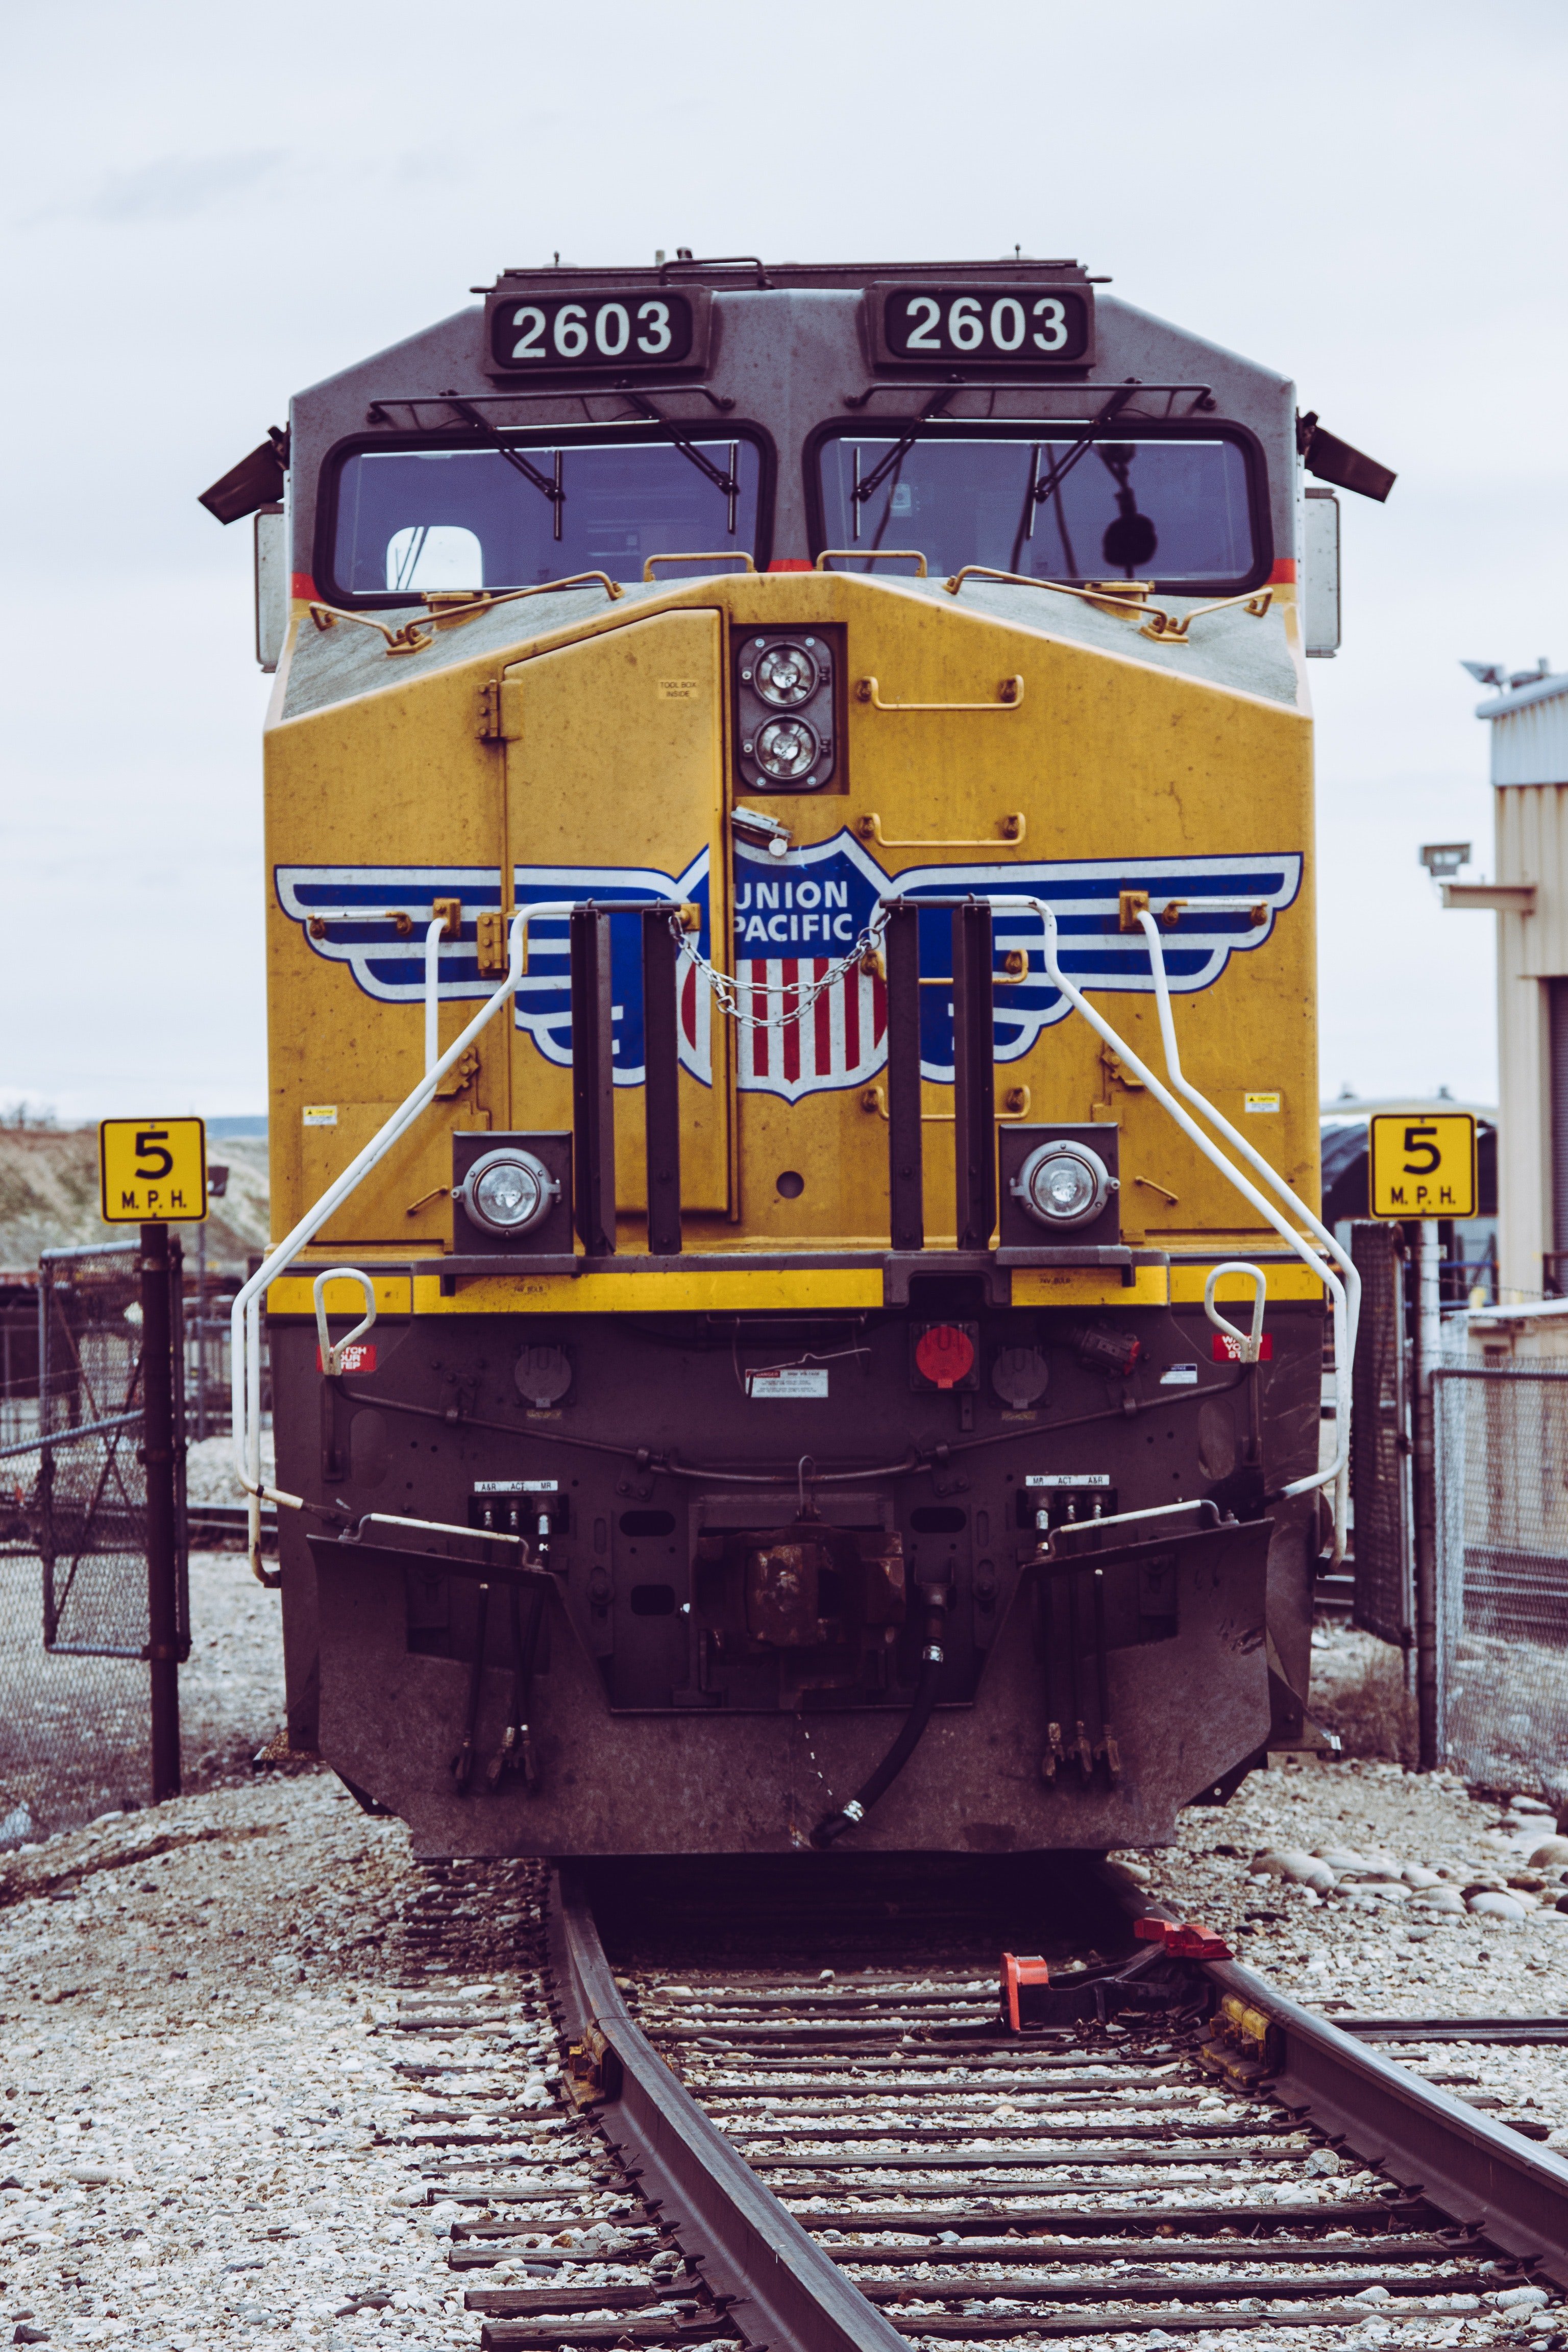 Train on the tracks | Photo: Pexels